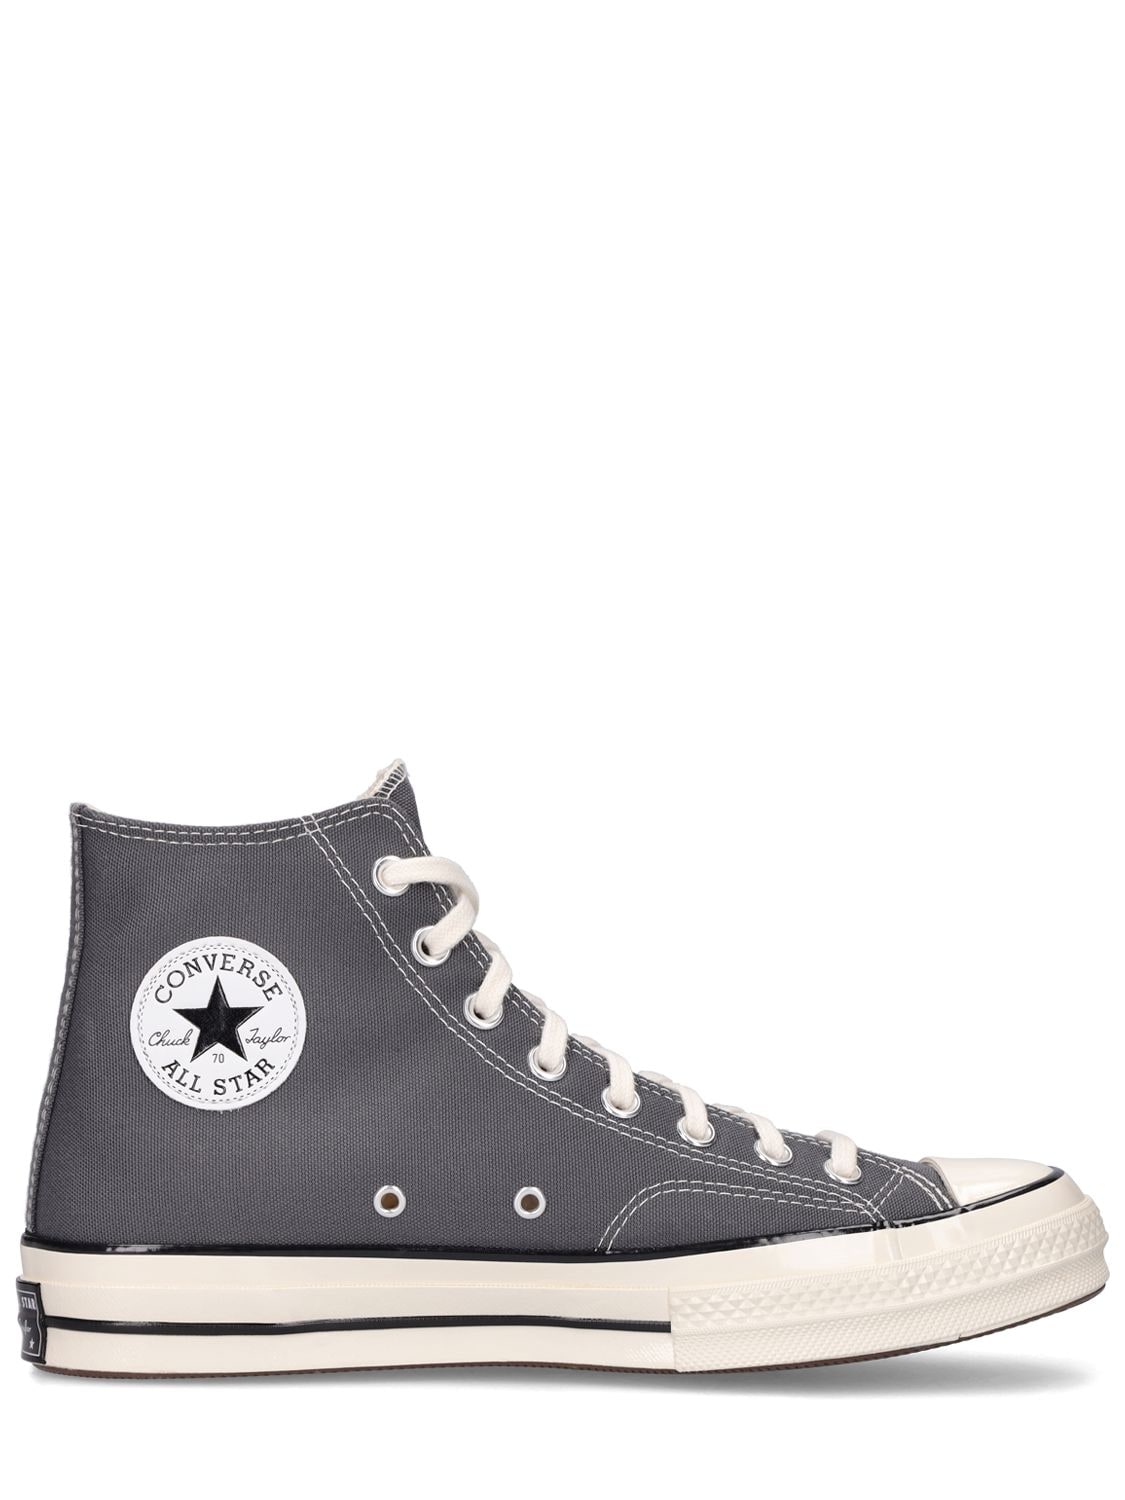 Converse Chuck 70 Vintage Canvas Sneakers In Iron Grey | ModeSens